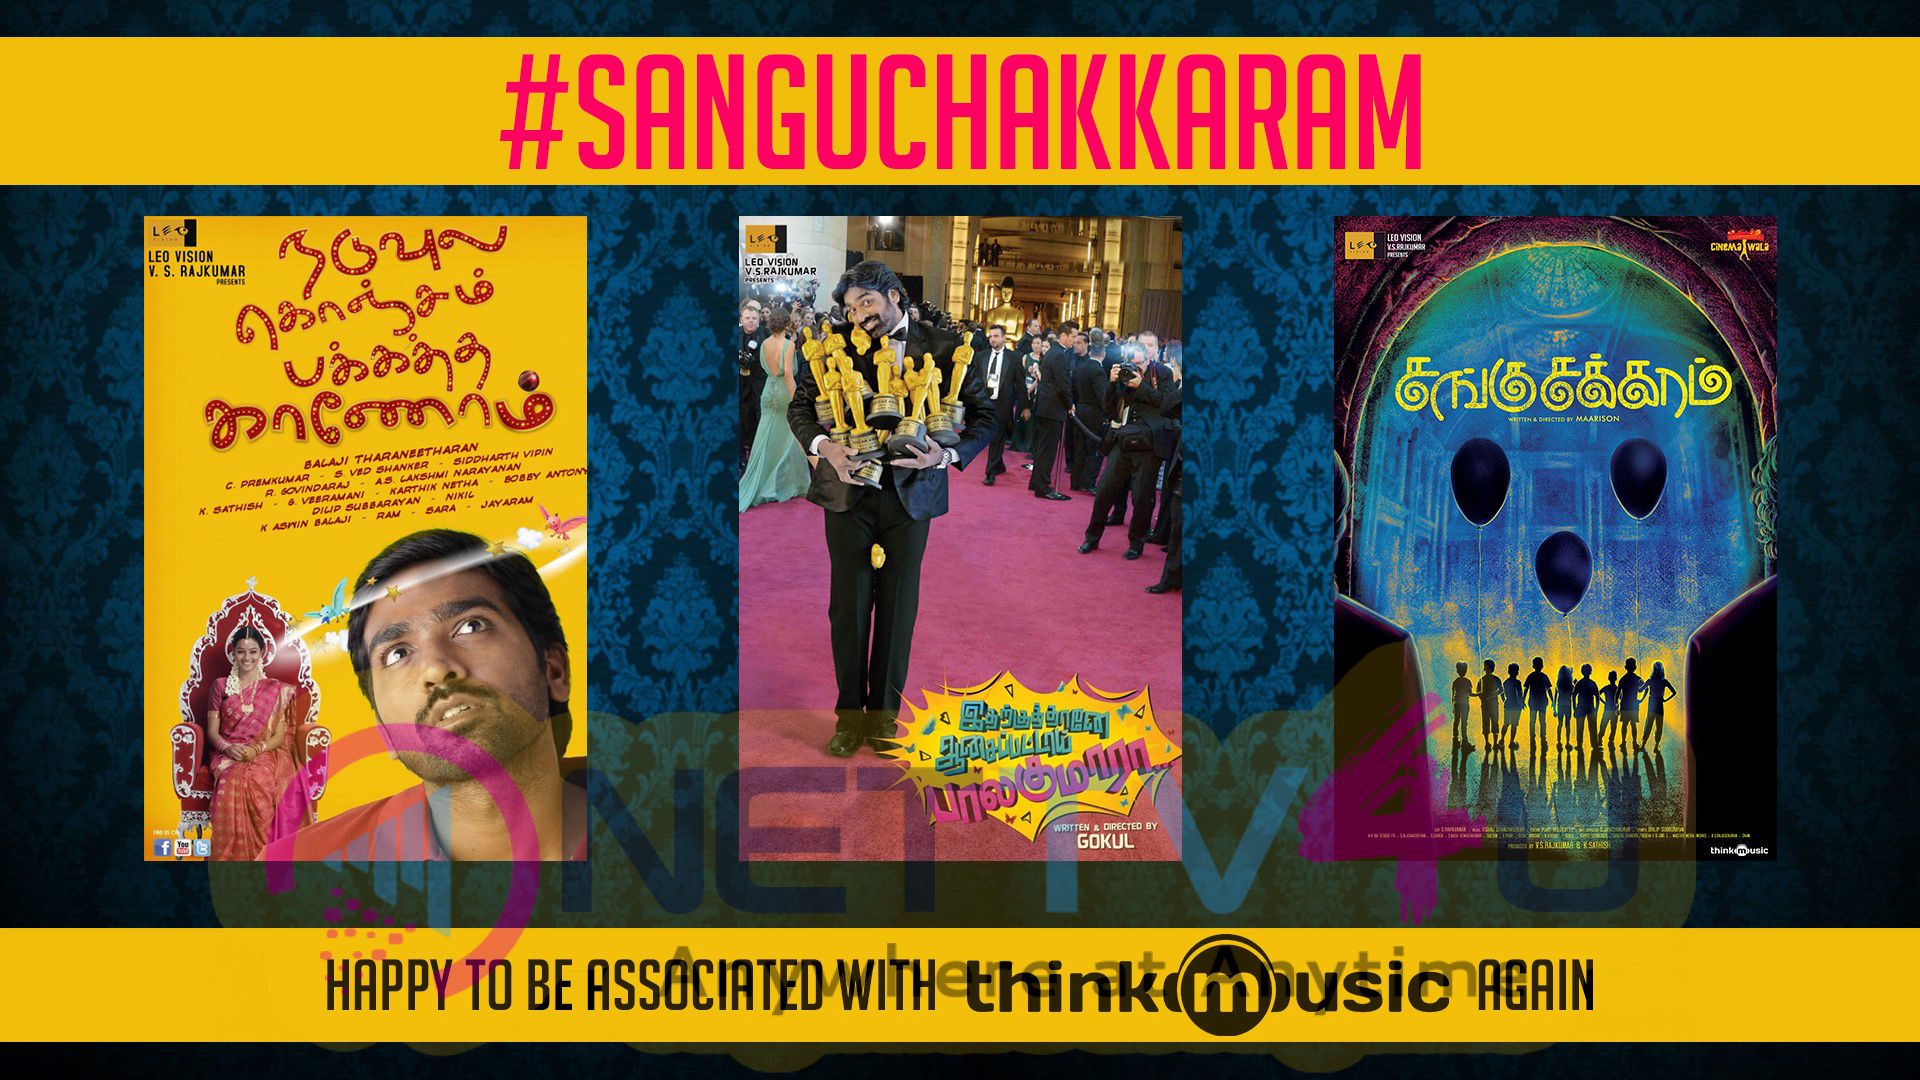 Tamil Movie Sangu Chakkaram Press Release Charming Posters Tamil Gallery